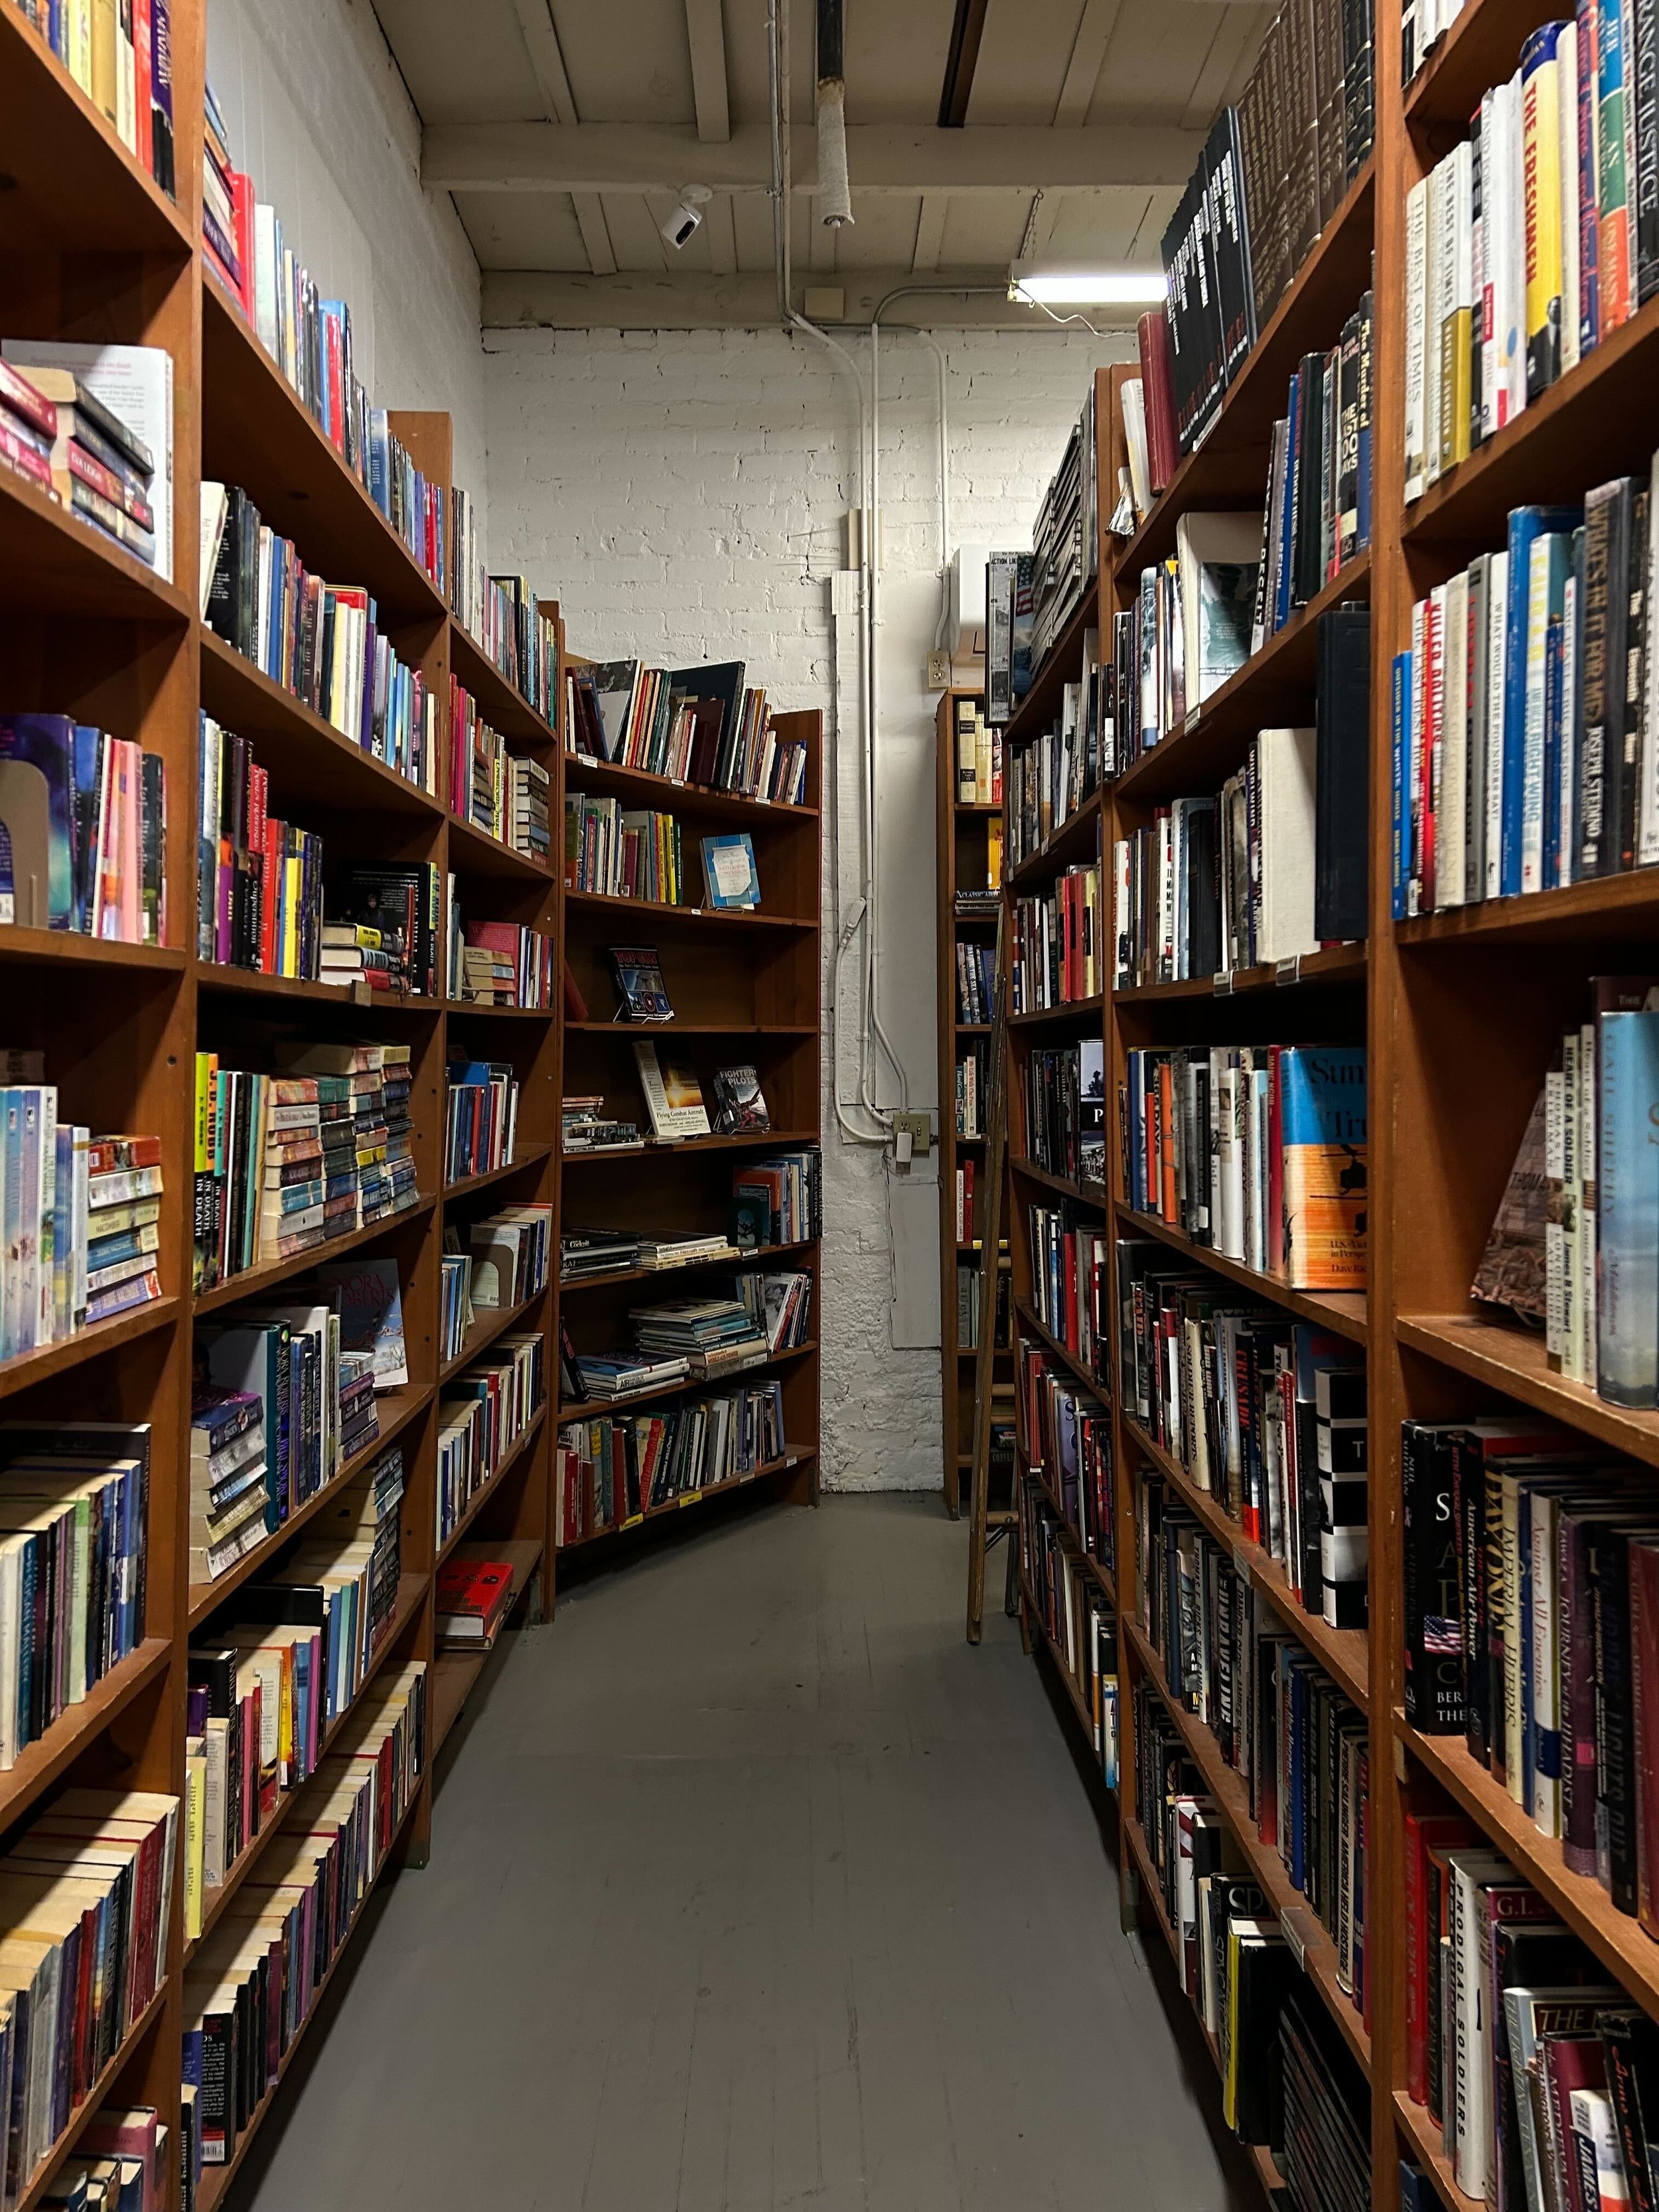 Hallway of books